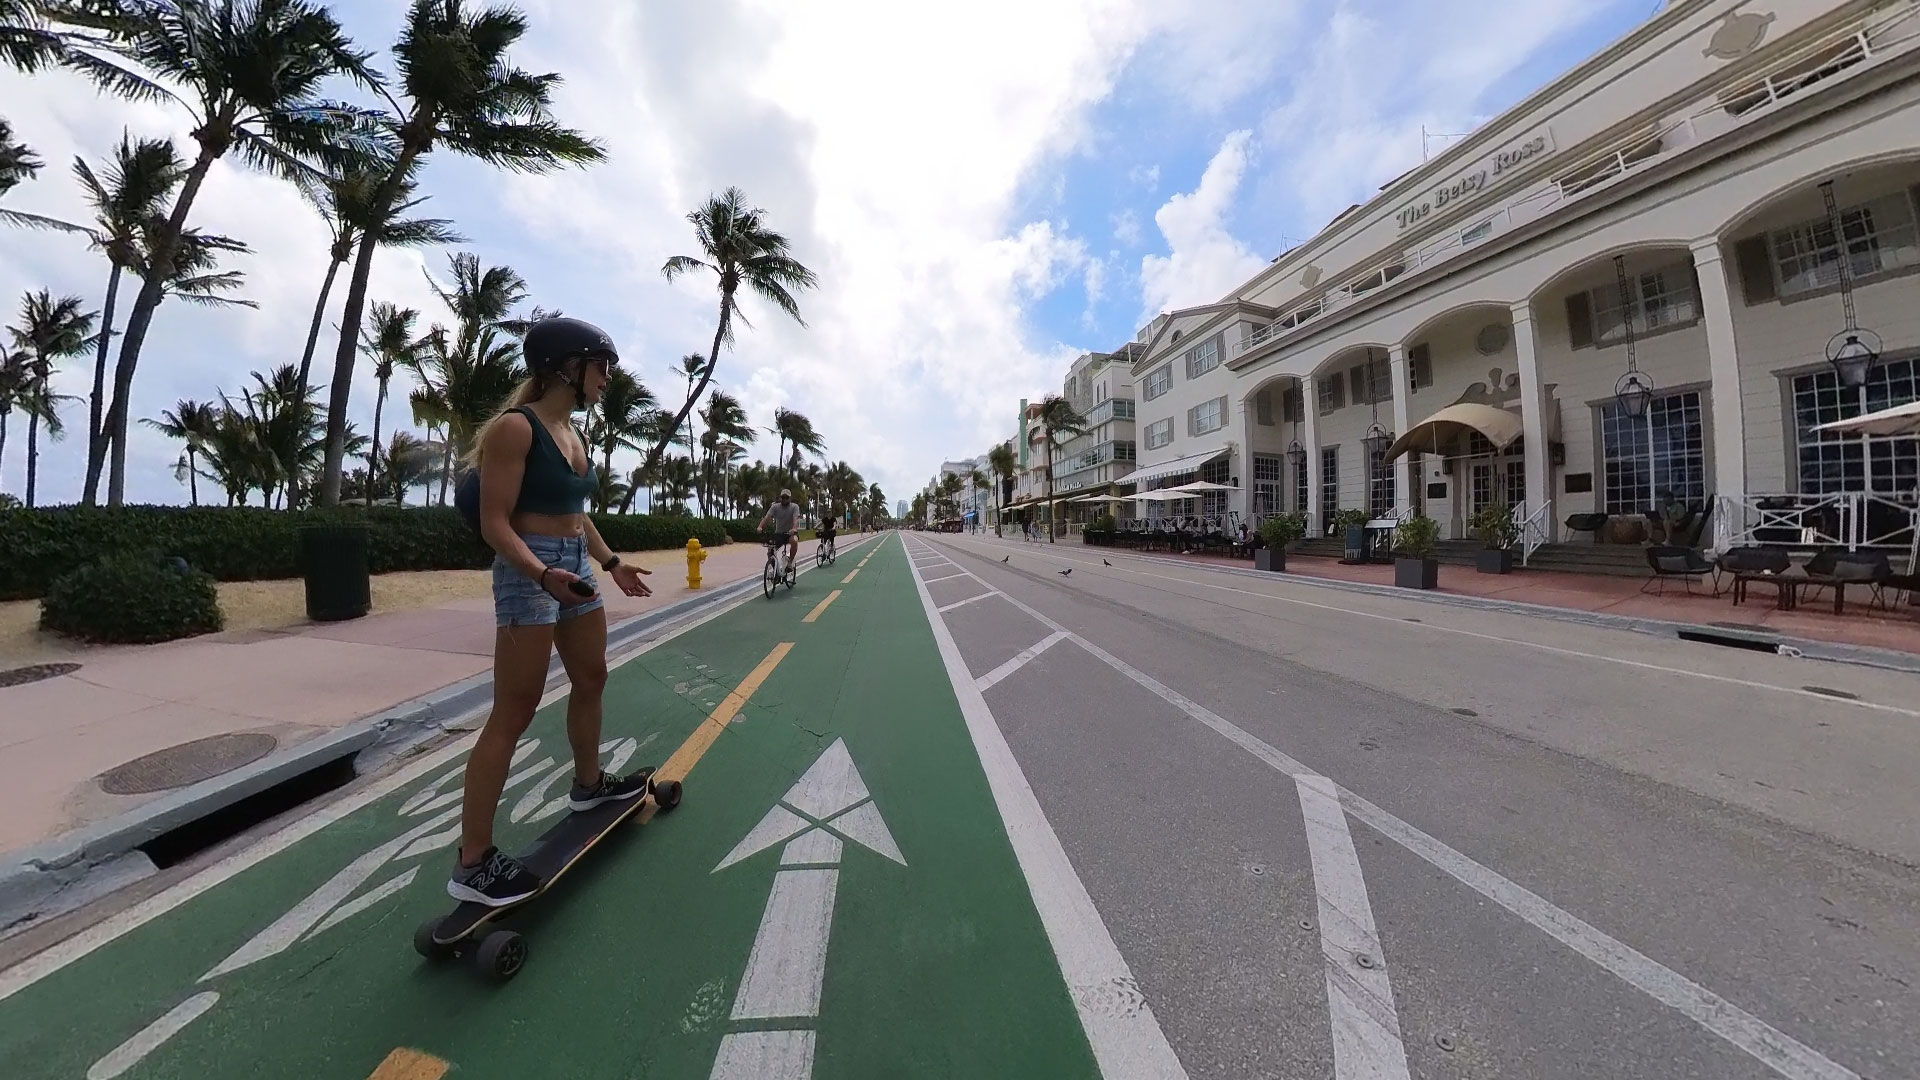 Our skateboarding tour cruises through Ocean Drive. 